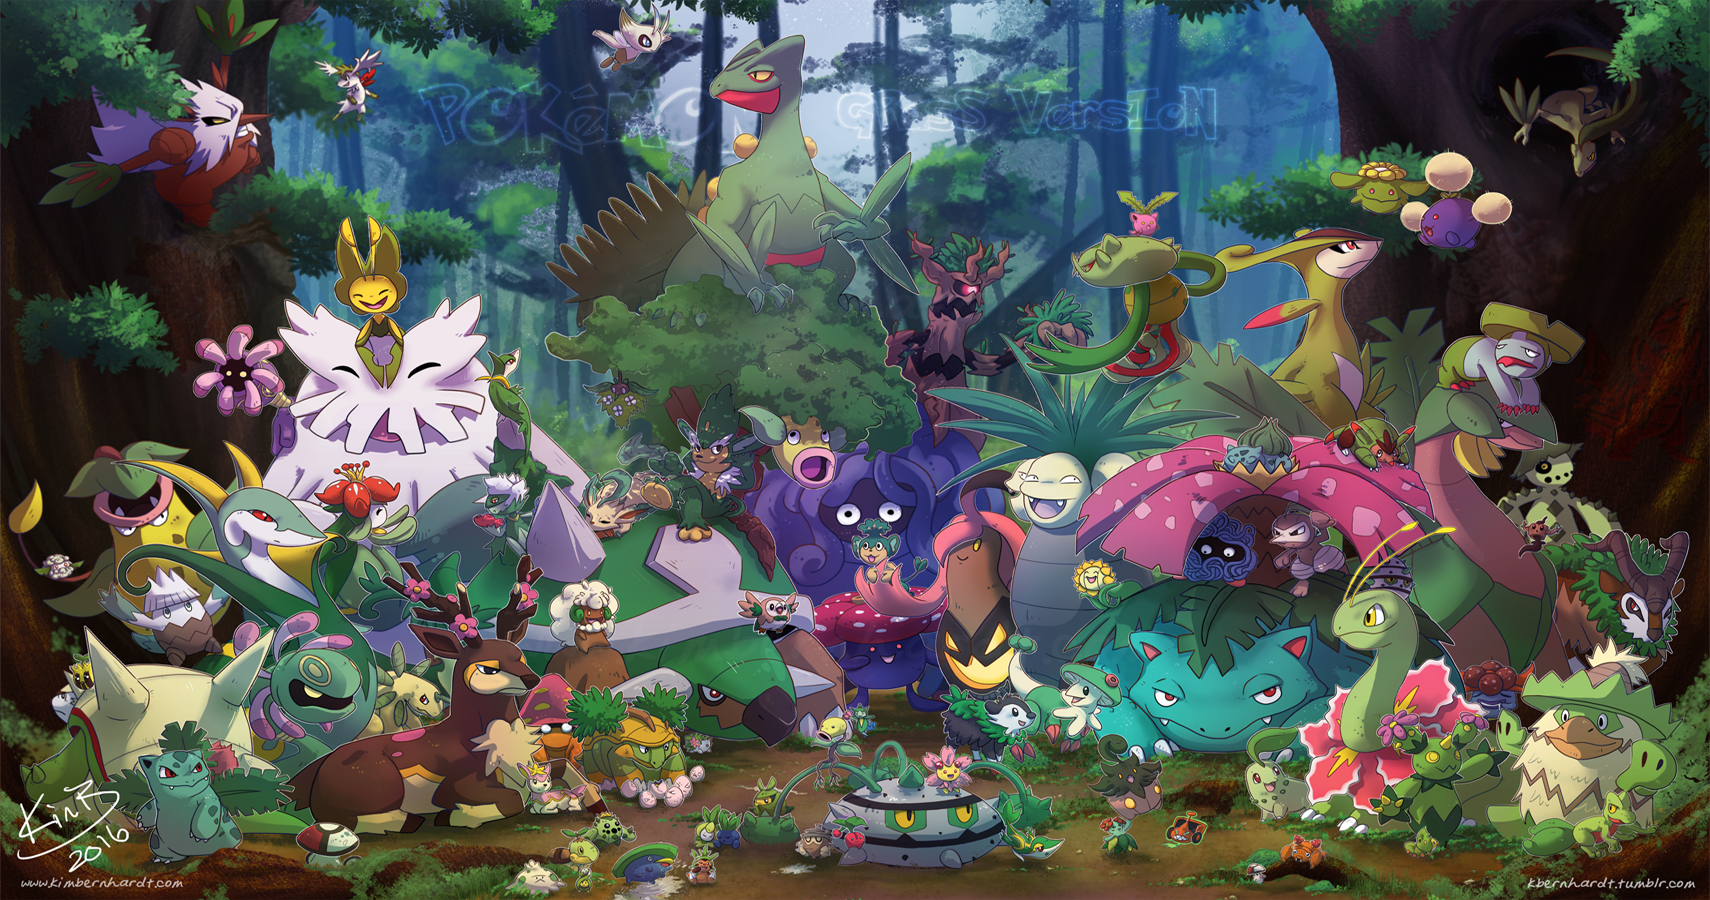 Pokémon: 10 Pieces of Grass Pokémon Fan Art We Love | CBR